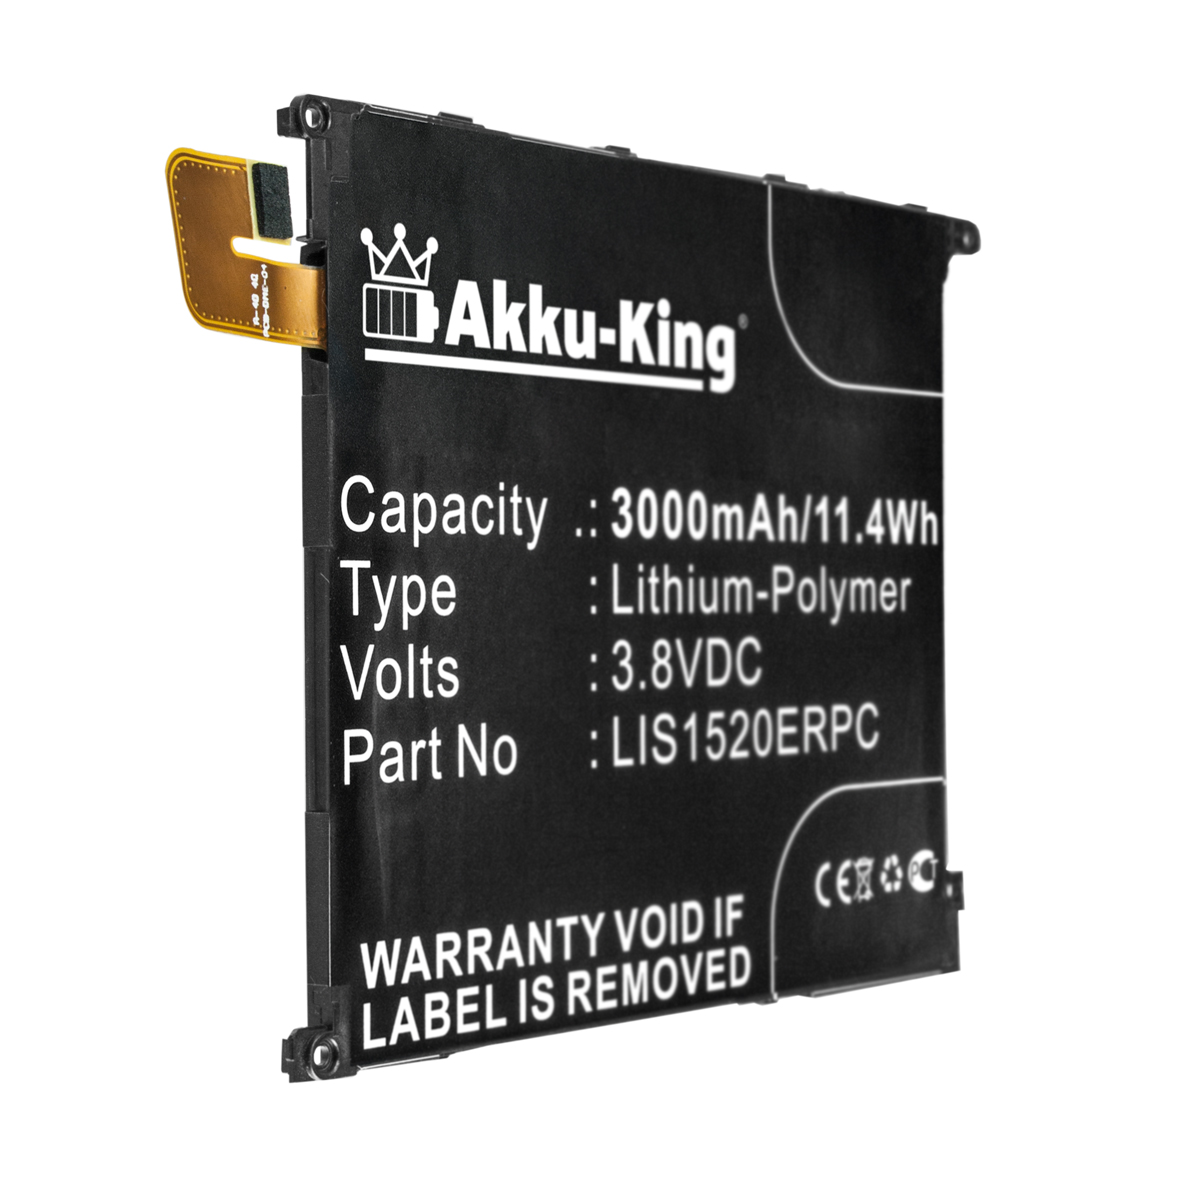 AKKU-KING Akku Handy-Akku, kompatibel 3.8 mit Volt, LIS1520ERPC Li-Polymer 3000mAh Sony